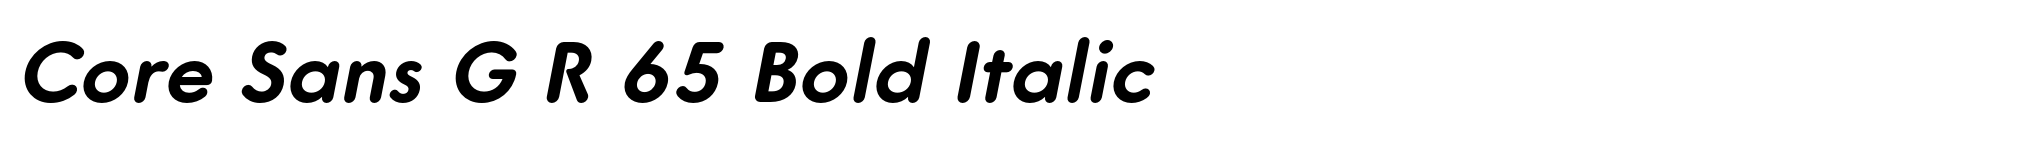 Core Sans G R 65 Bold Italic image